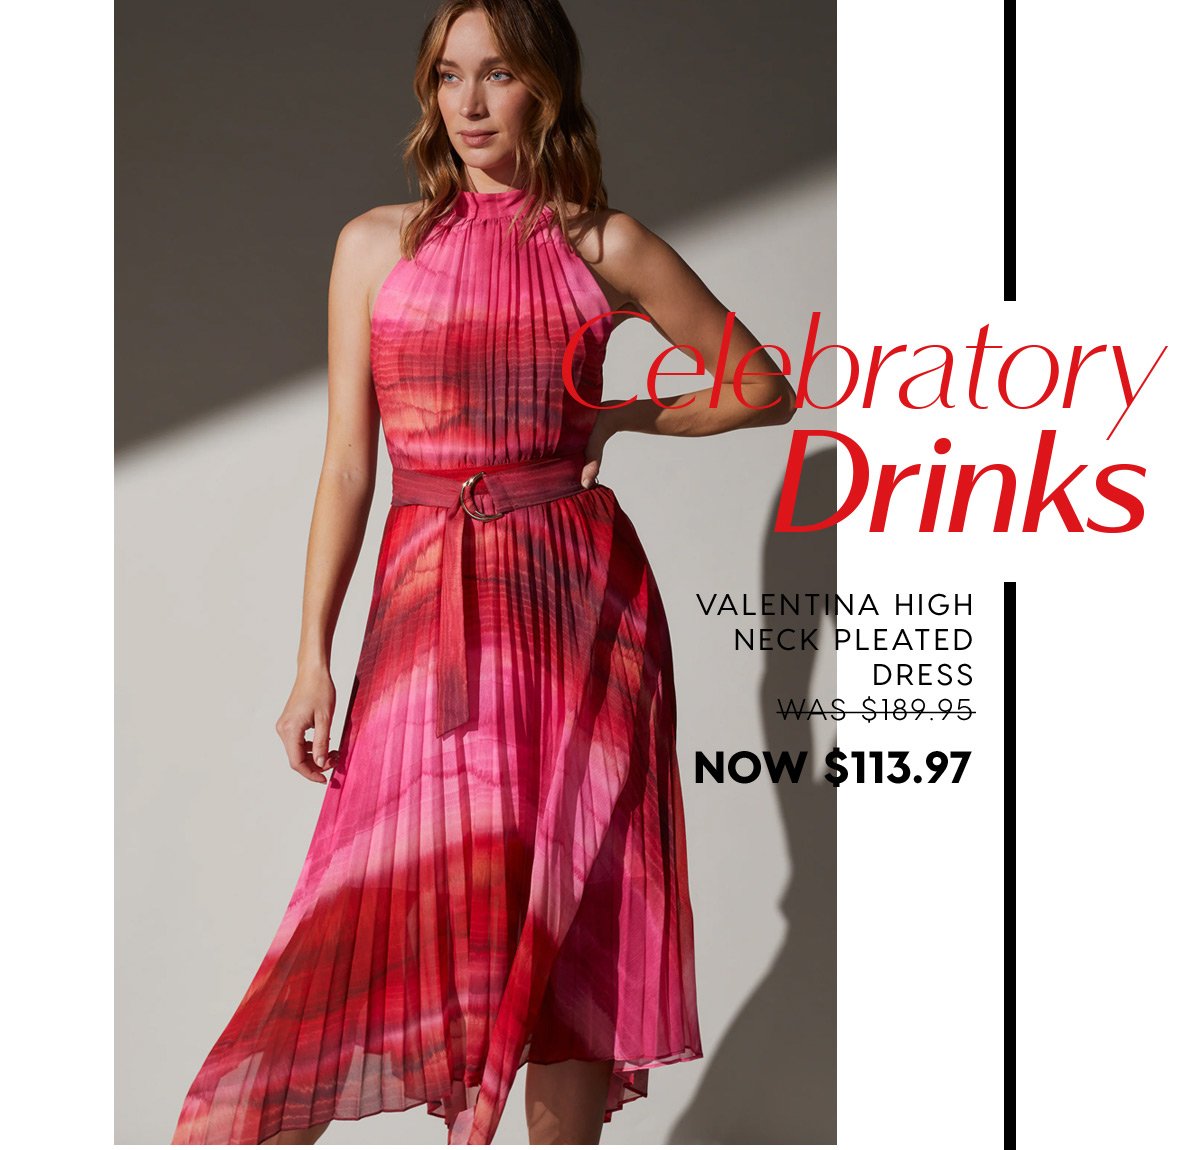 Celebratory Drinks.Valentina High Neck Pleated Dress  WAS $189.95 NOW $132.96